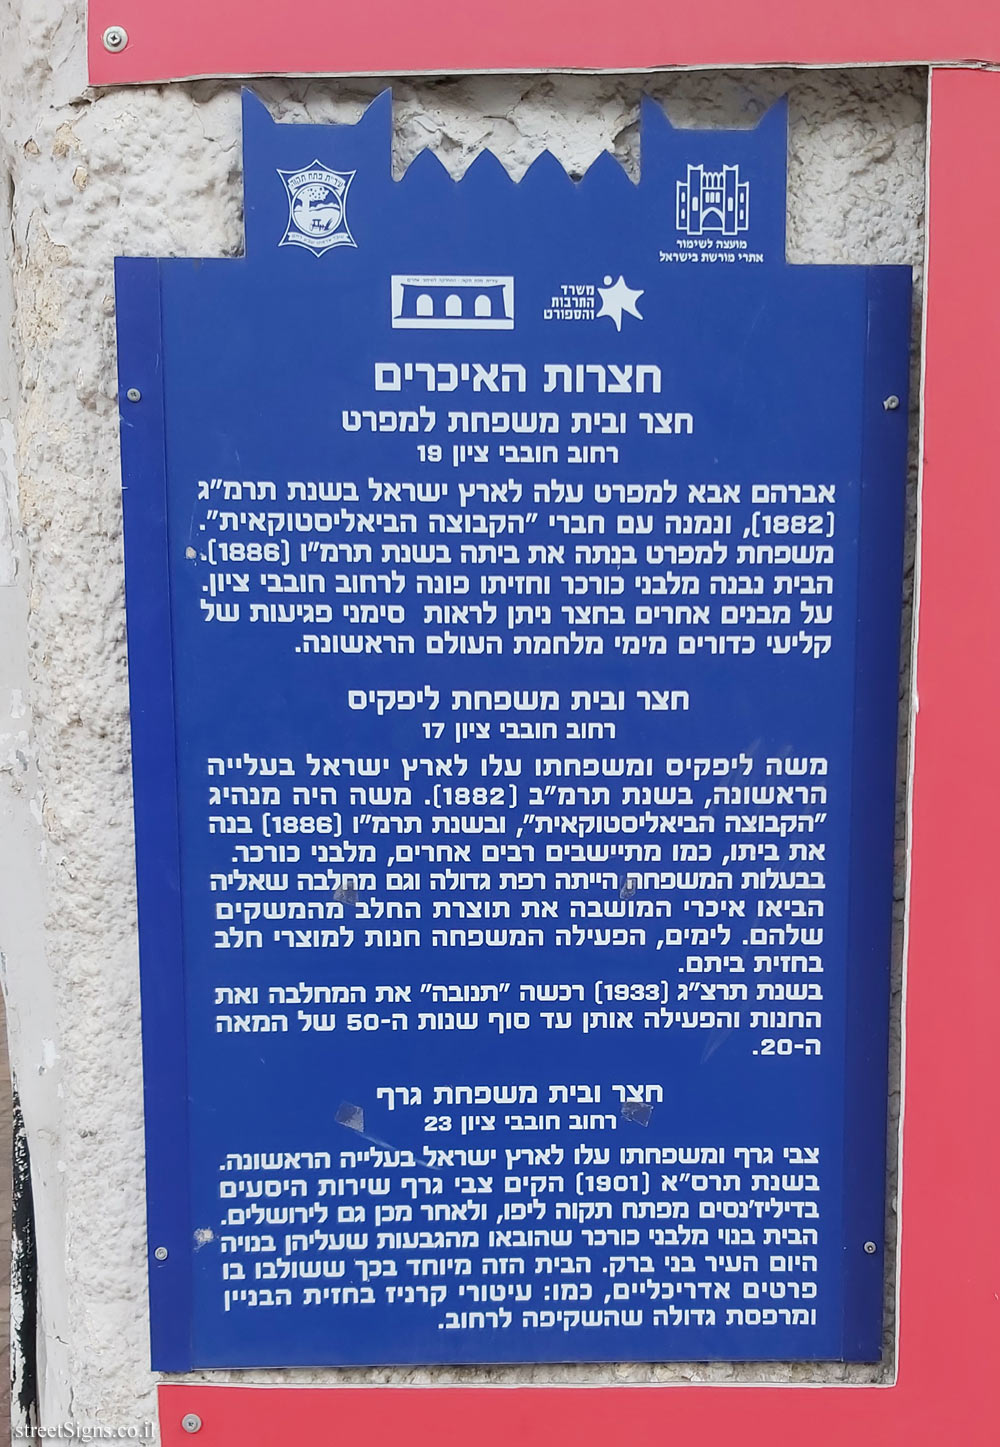 Petah Tikva - Heritage Sites in Israel - Farmers’ Courts